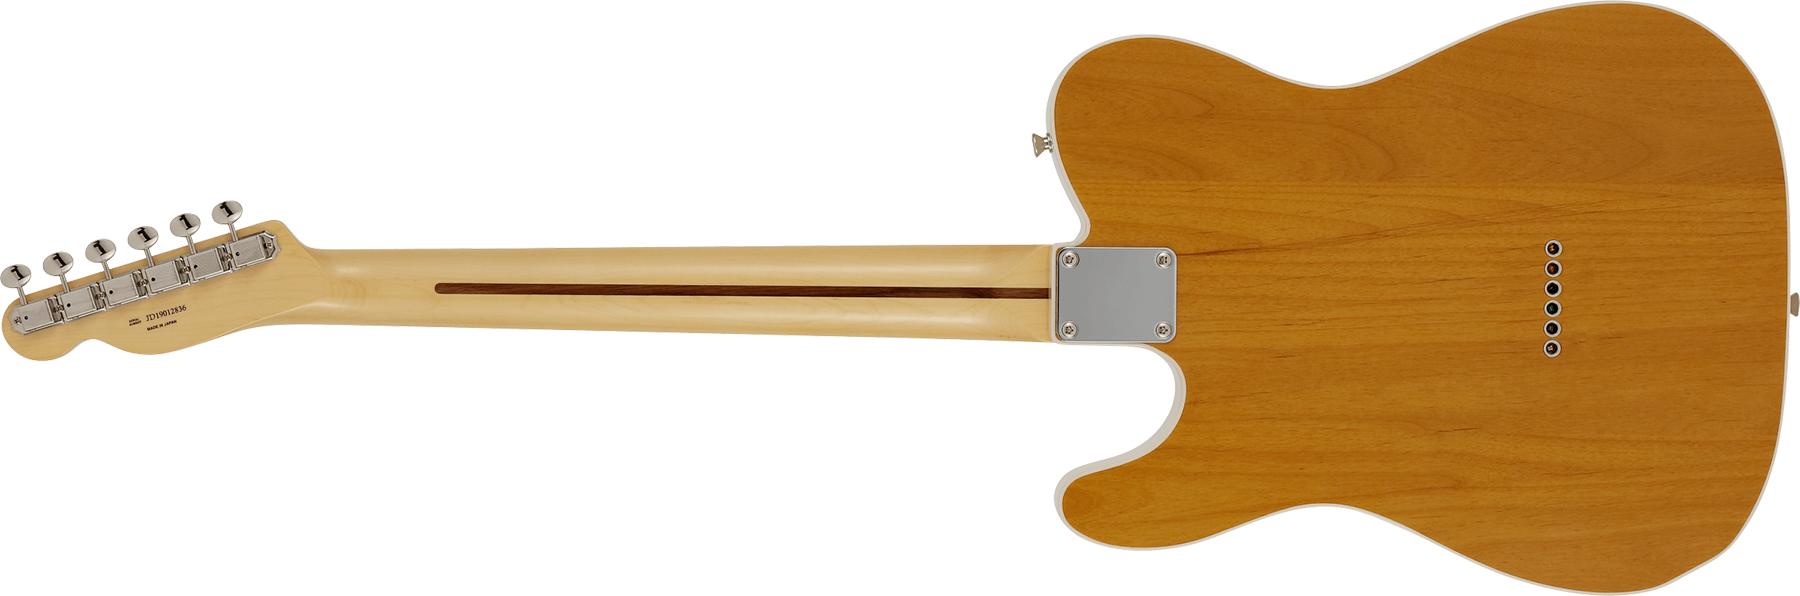 Fender Tele Mhak  Art Gallery Jap Hs Mn - Natural - Televorm elektrische gitaar - Variation 1